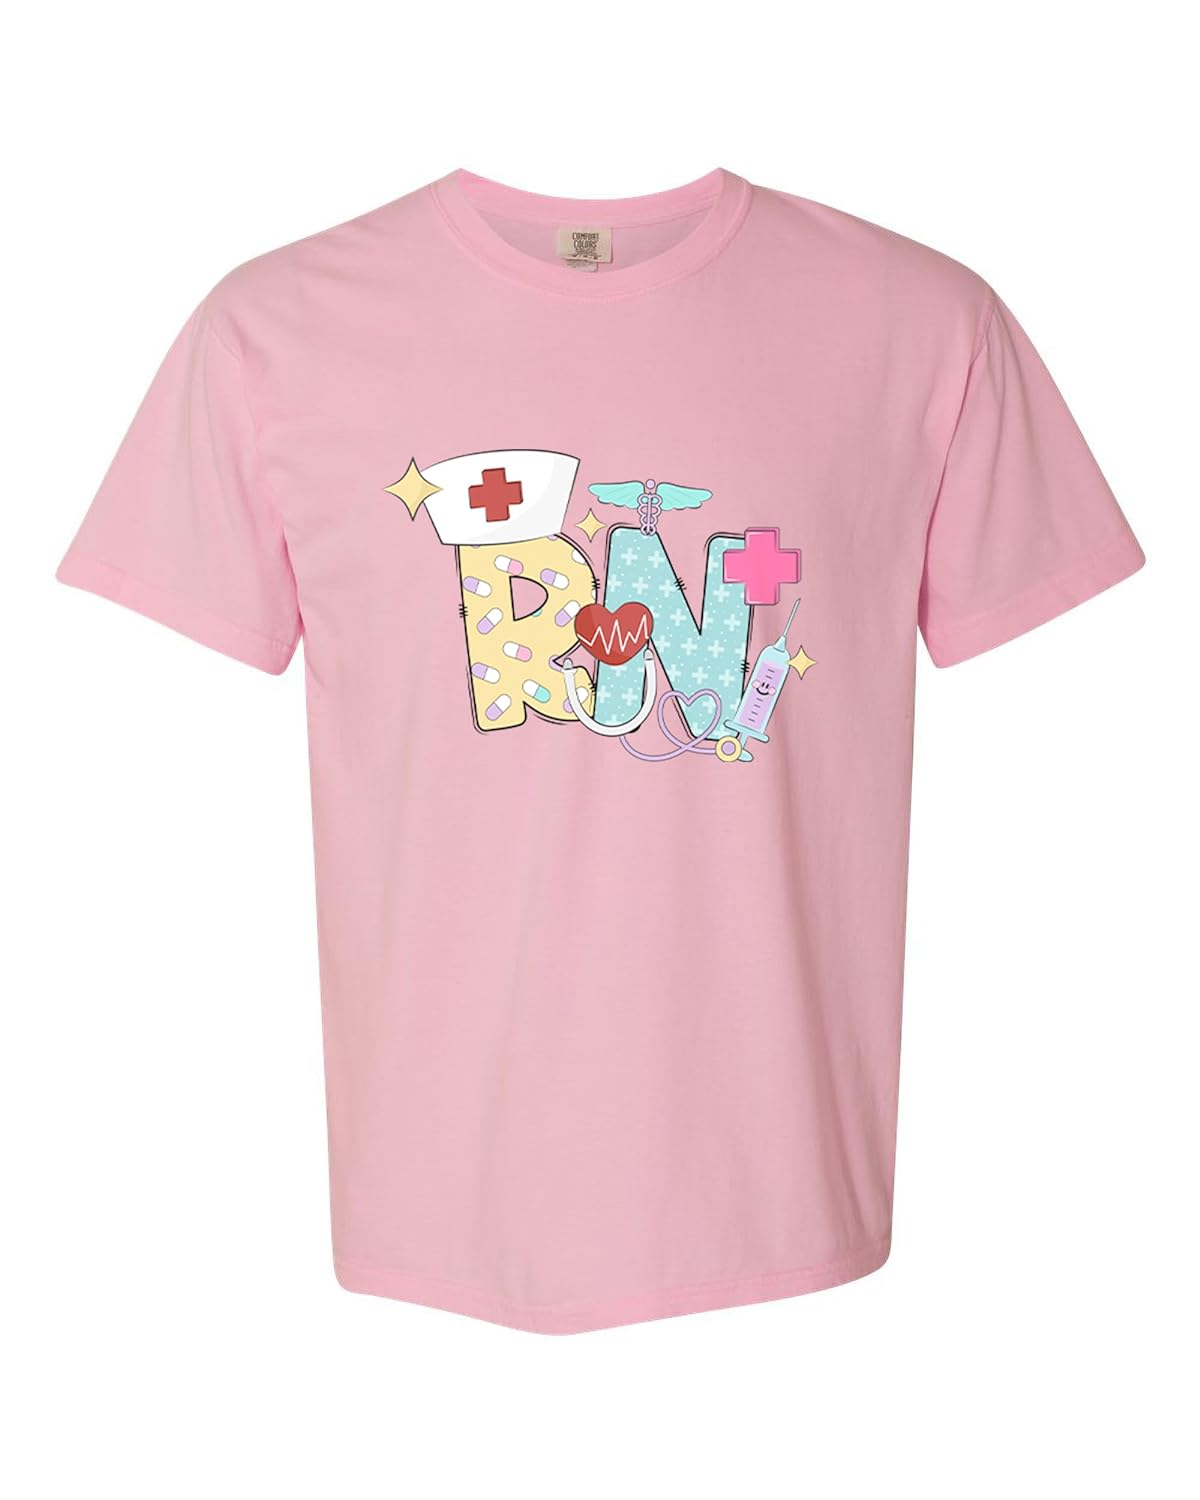 Registered Nurse shirt for women pink